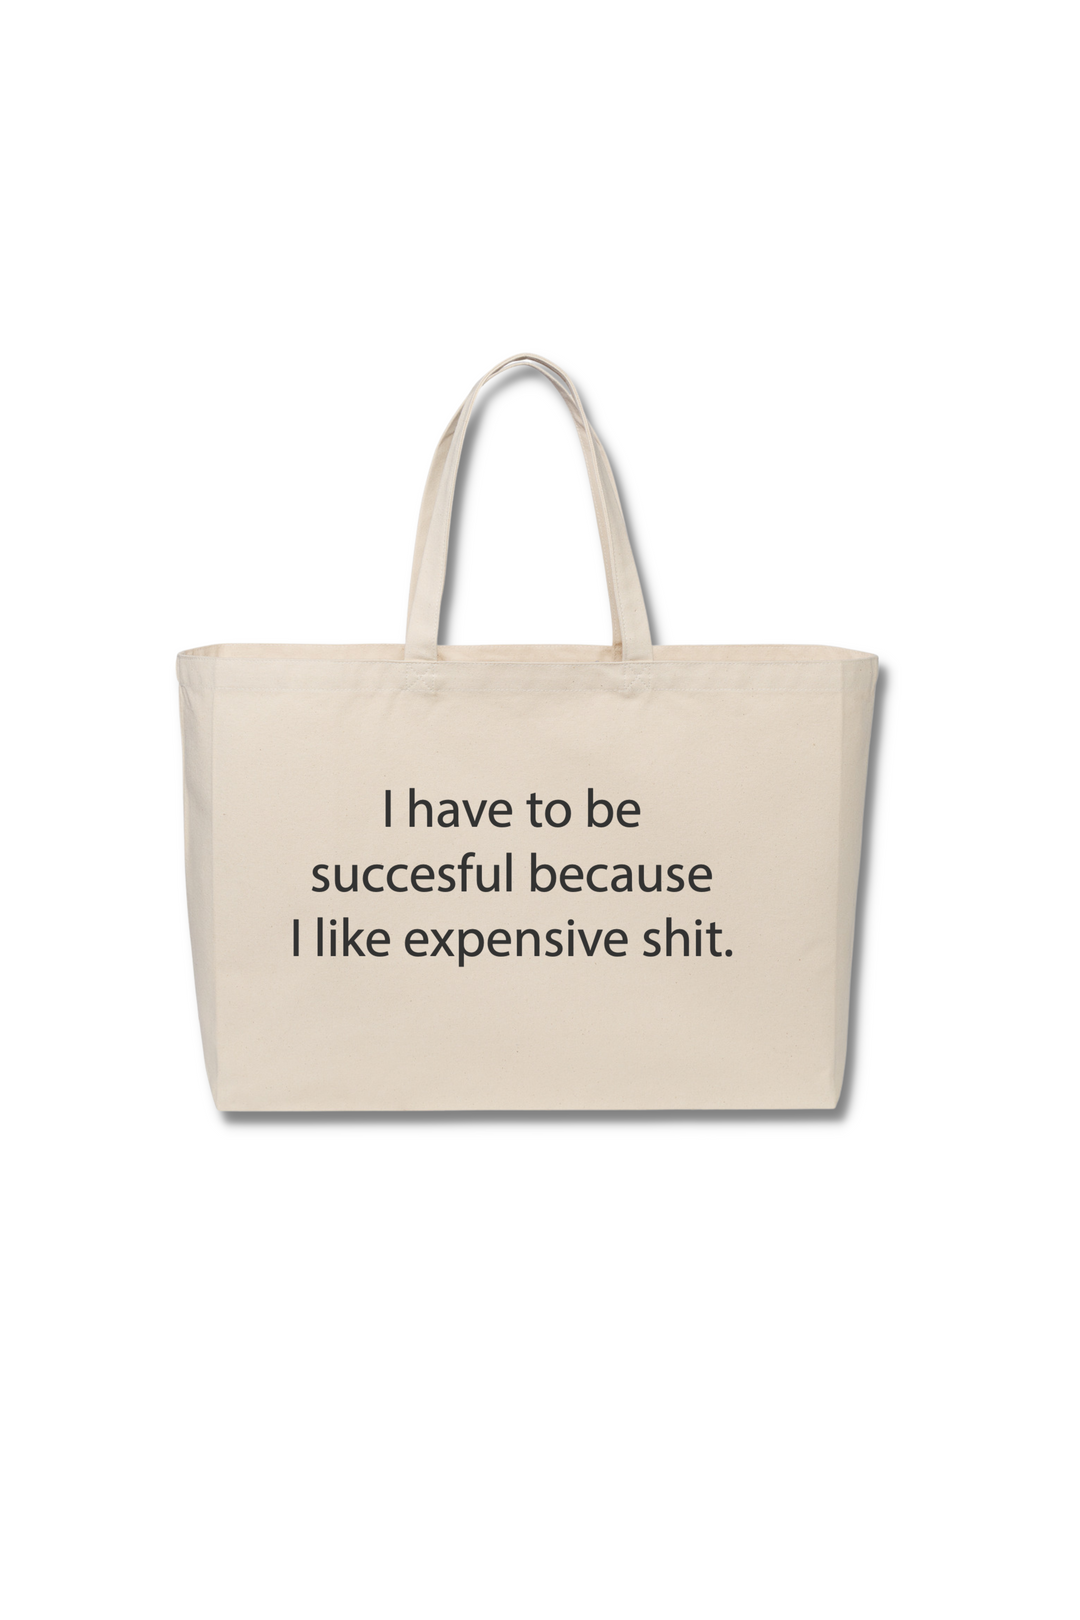 Tote bag expensive